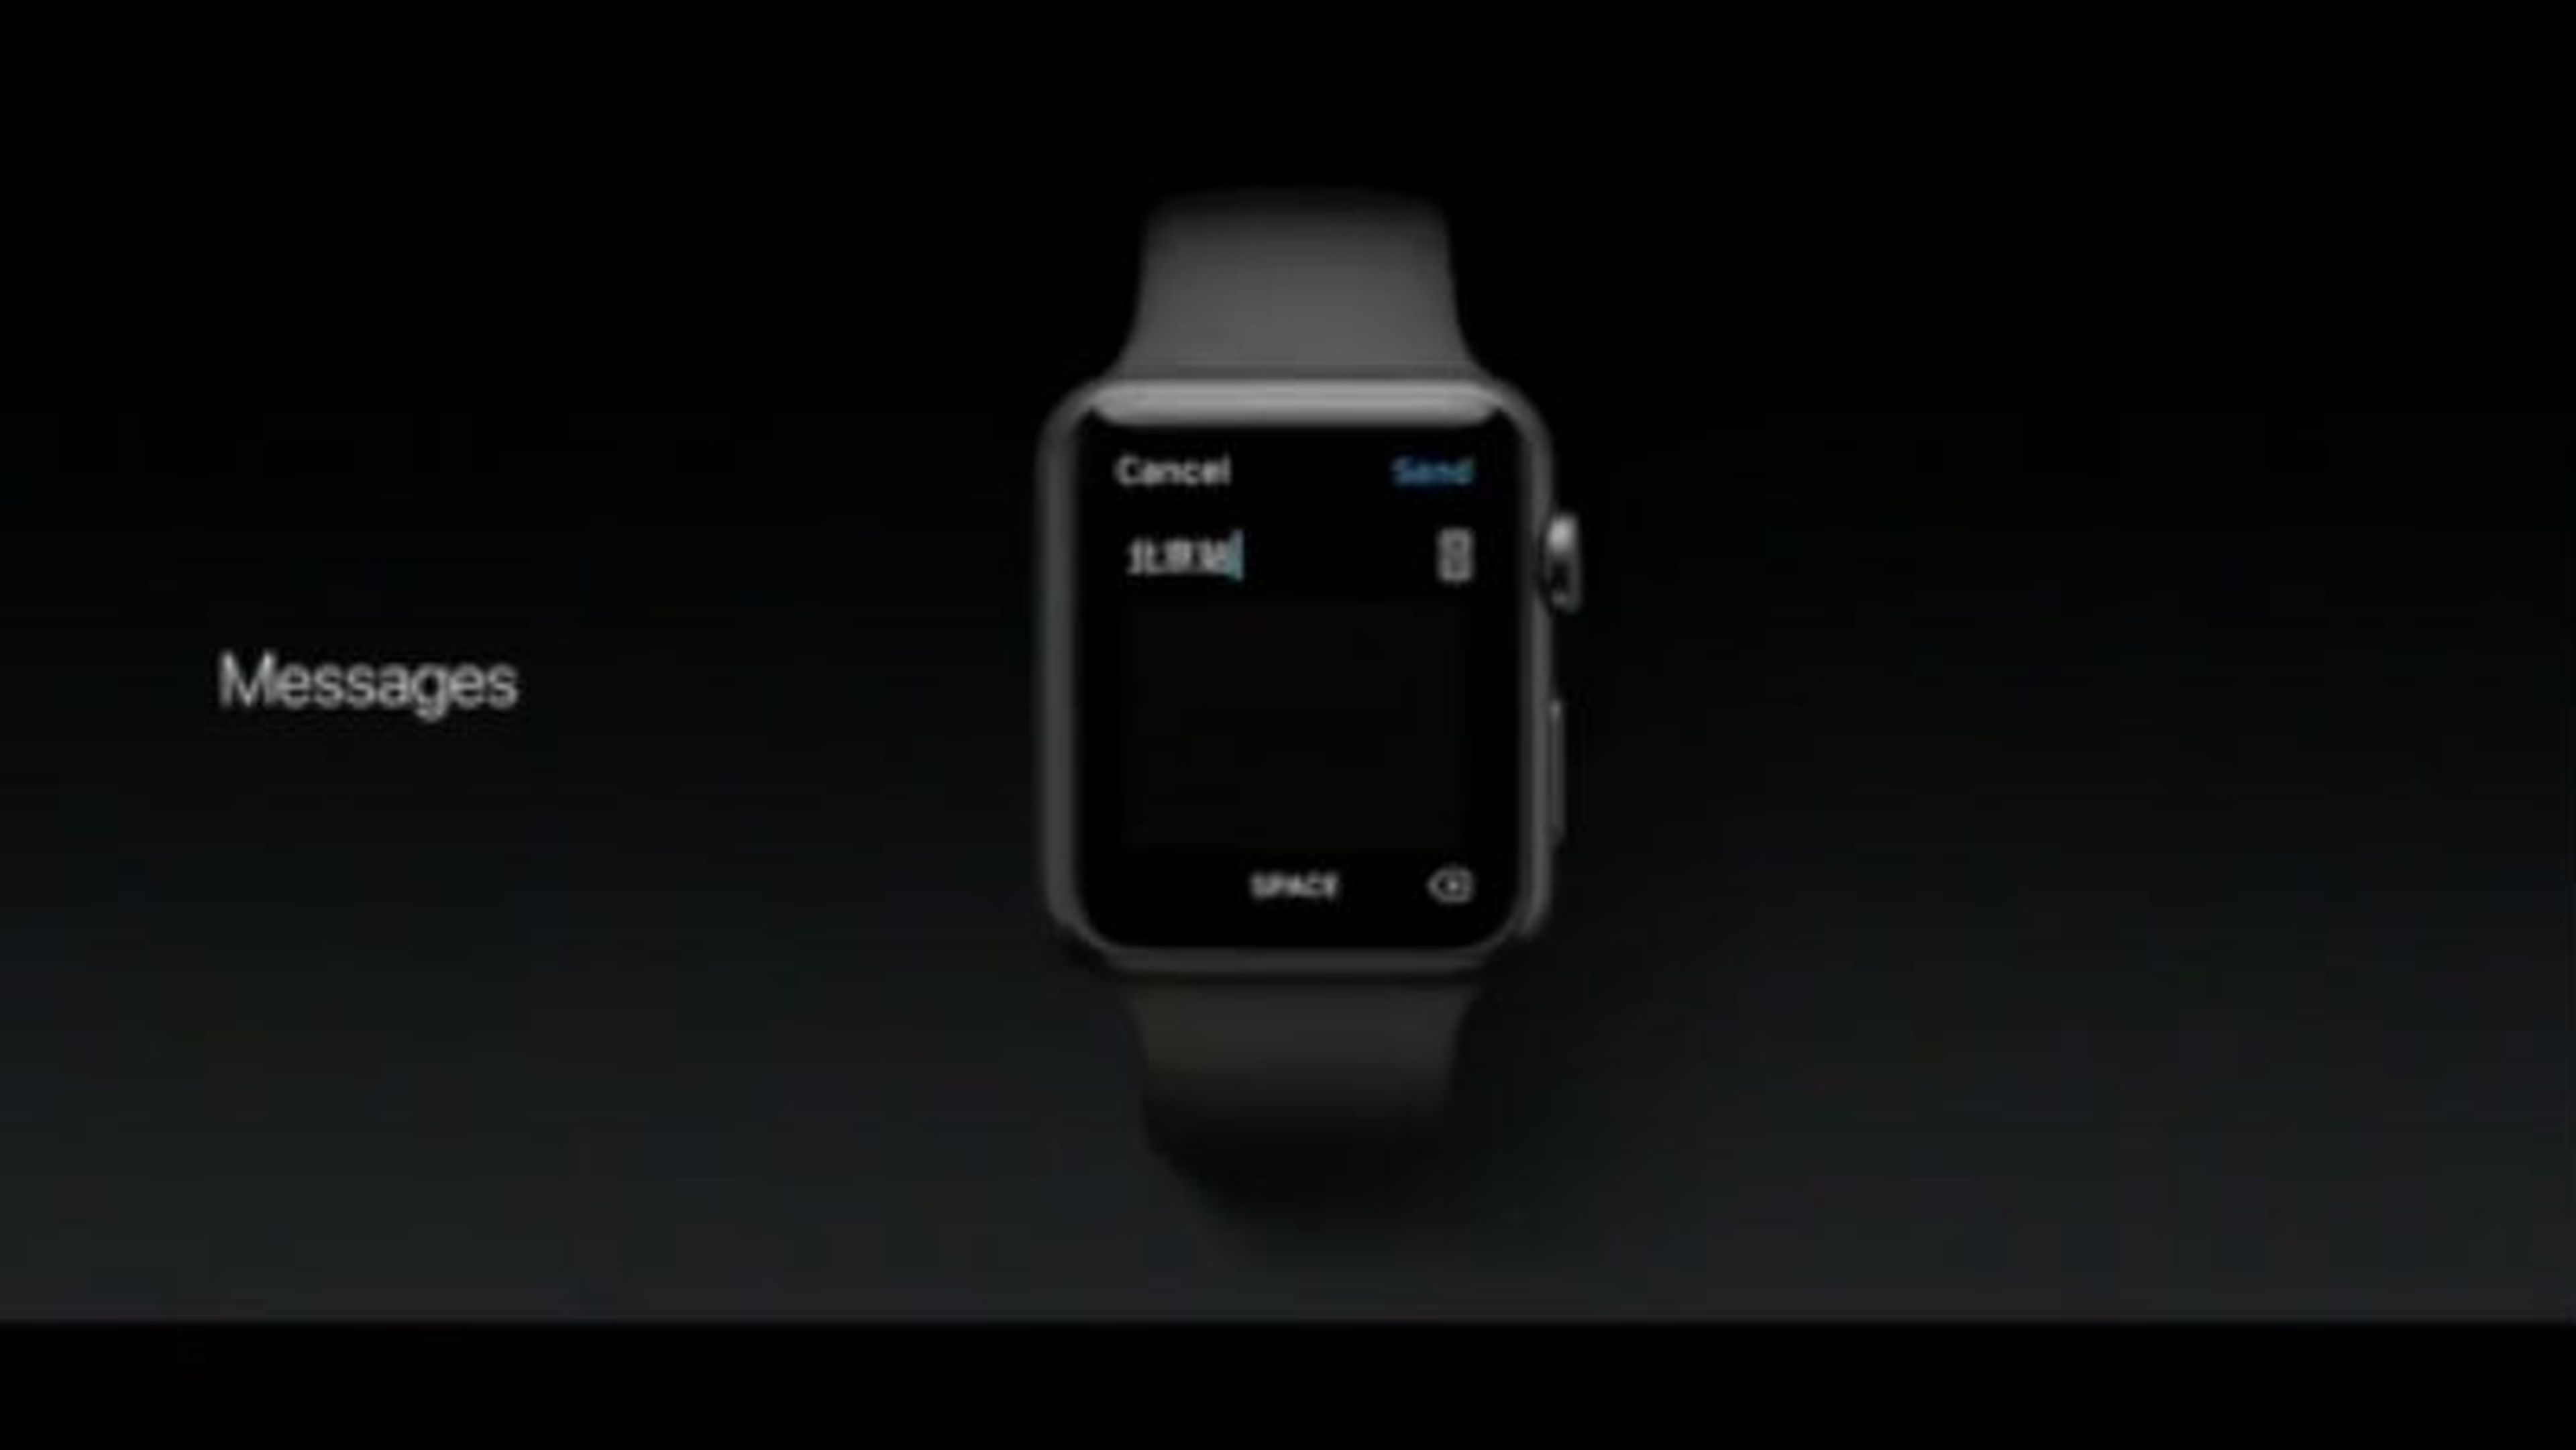 Apple Watch WatchOS 3